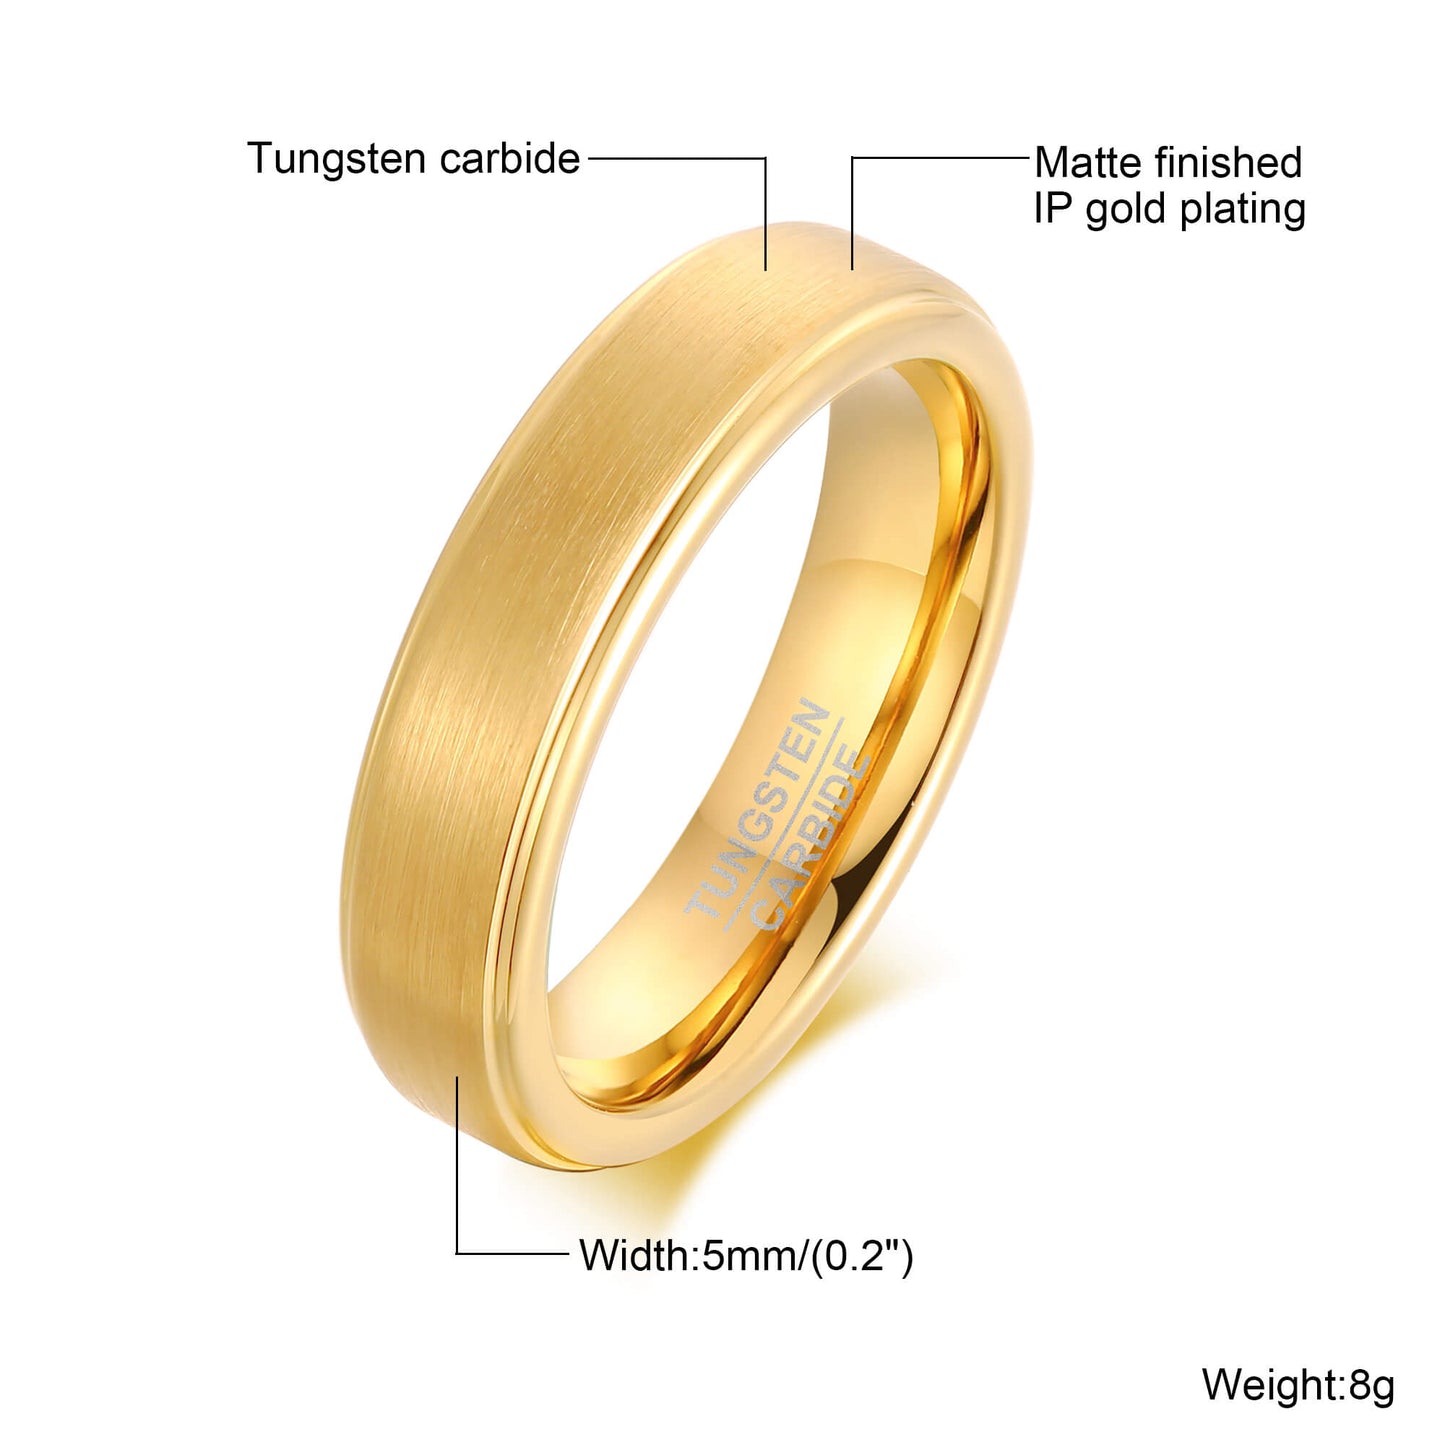 Matauric Step Tungsten Ring